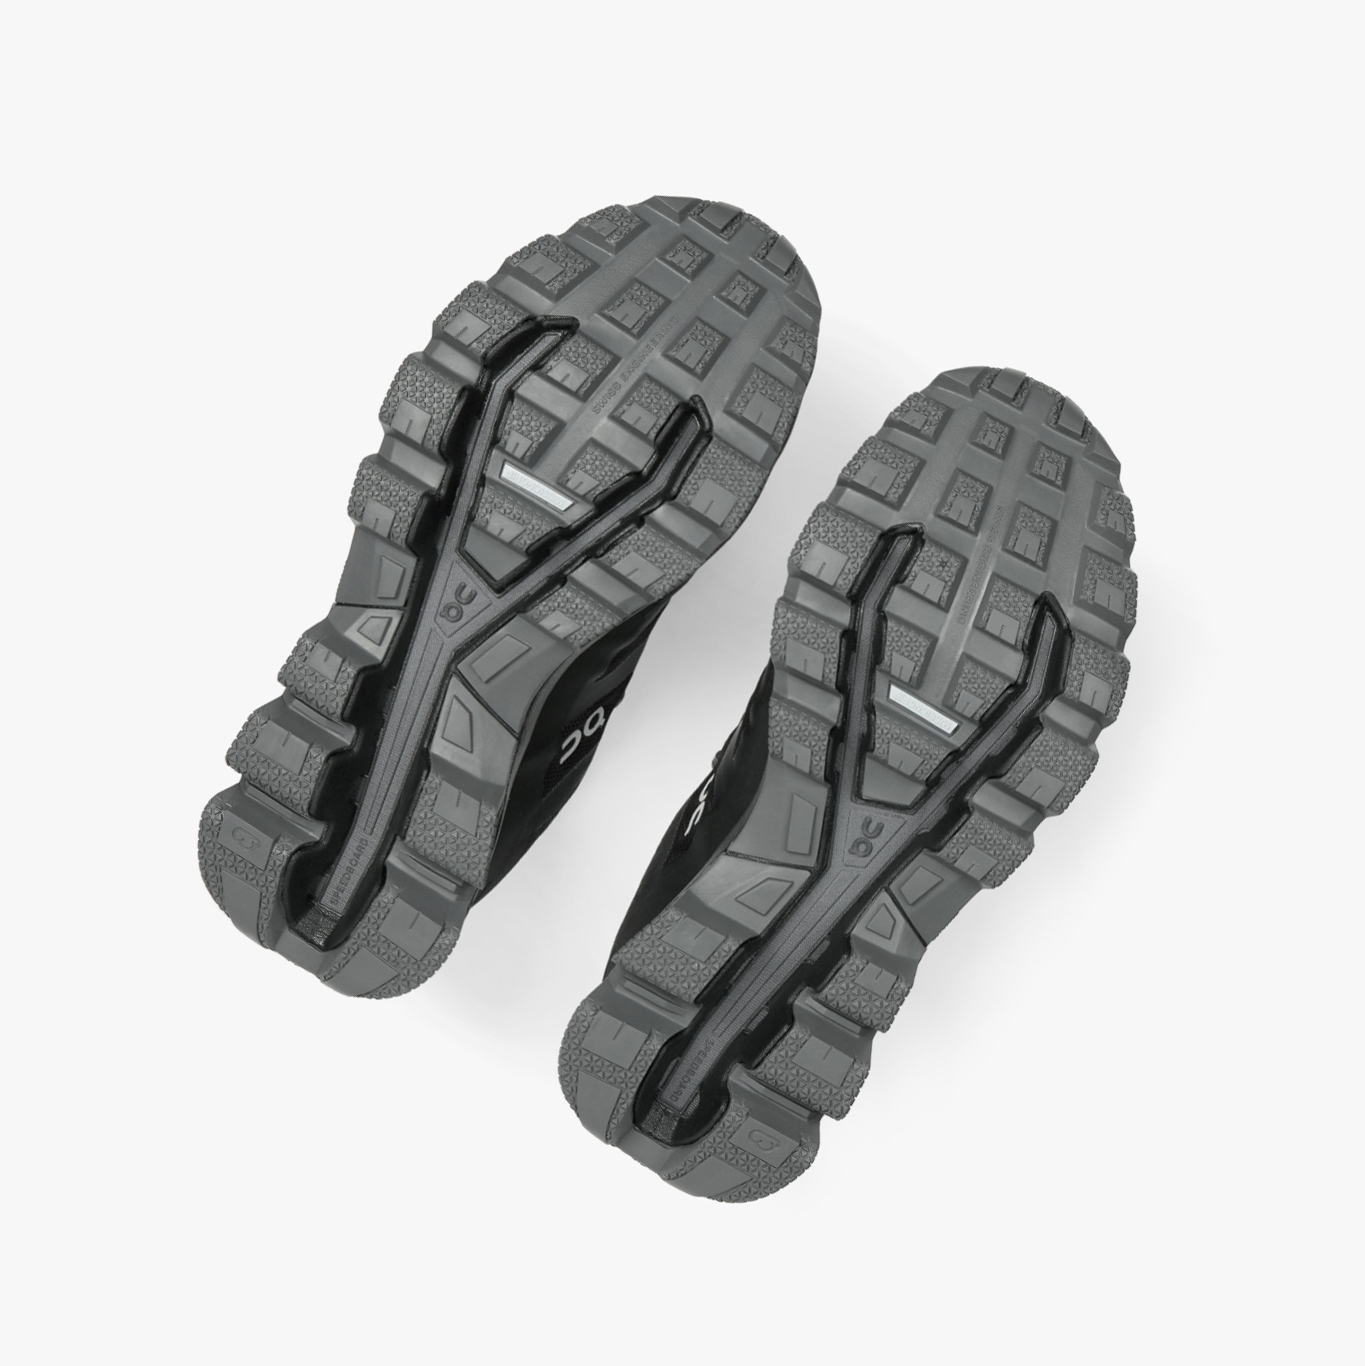 Women's QC Cloudventure Waterproof Trail Running Shoes Black | 623-JBMQOY